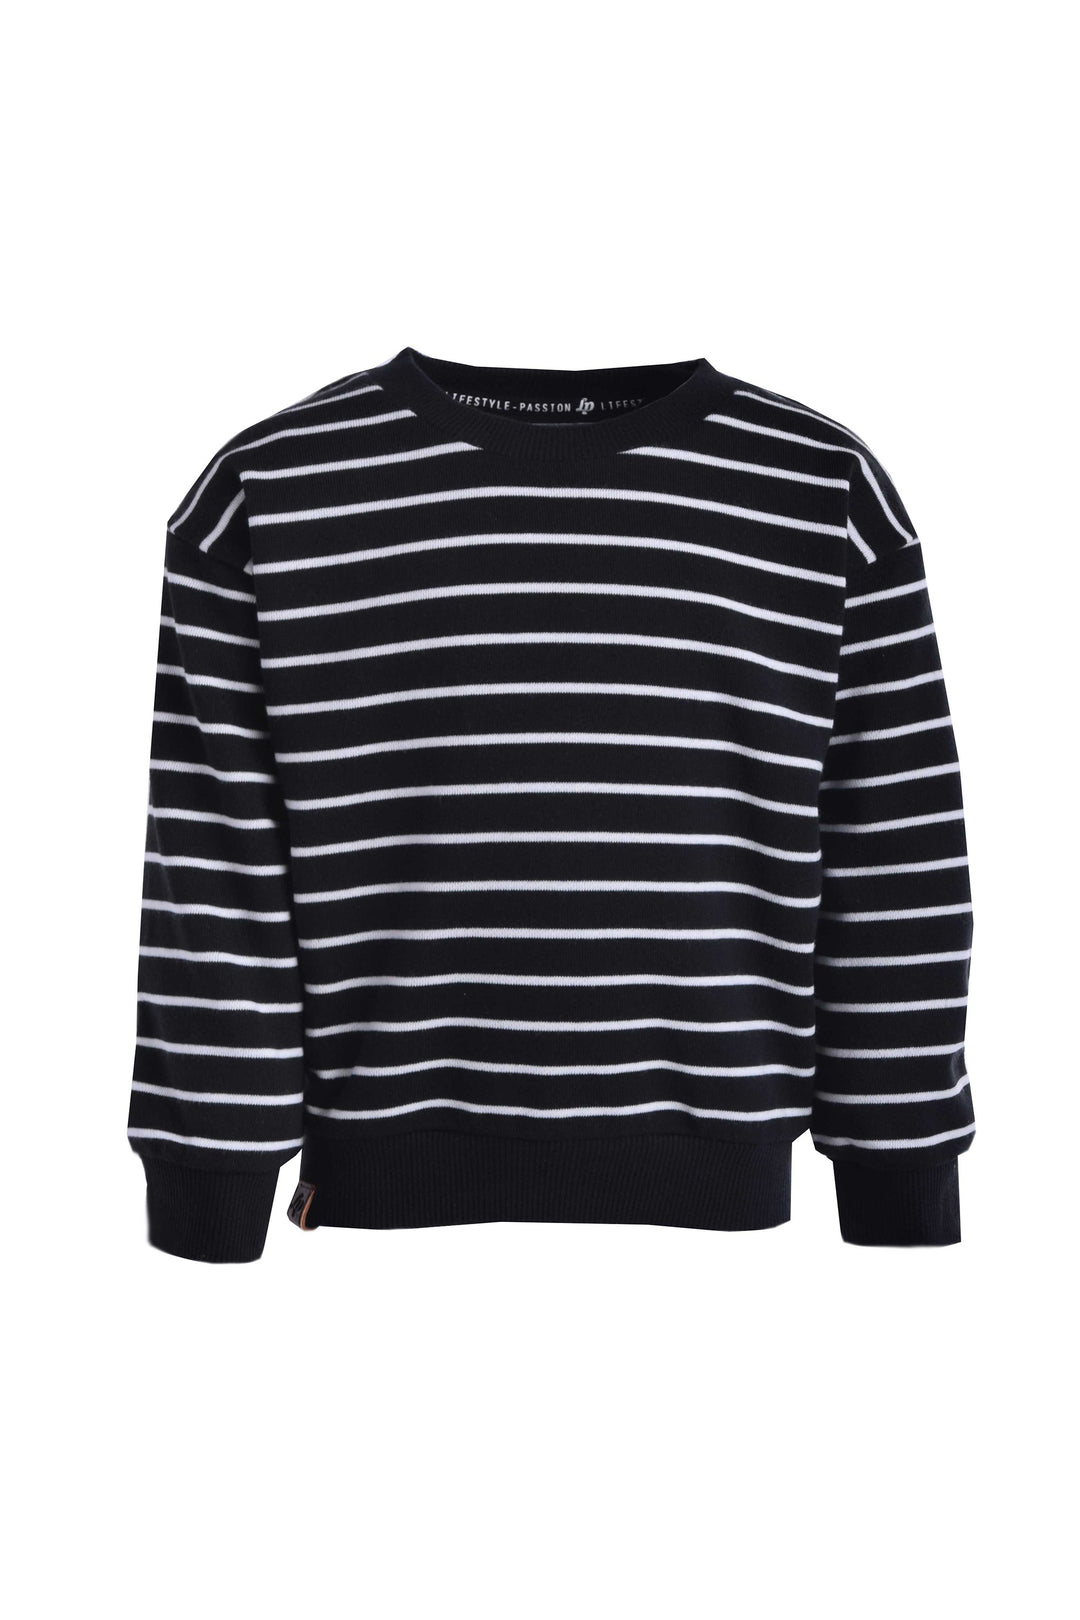 French Cotton Drop Shoulder Sweater [Junior]